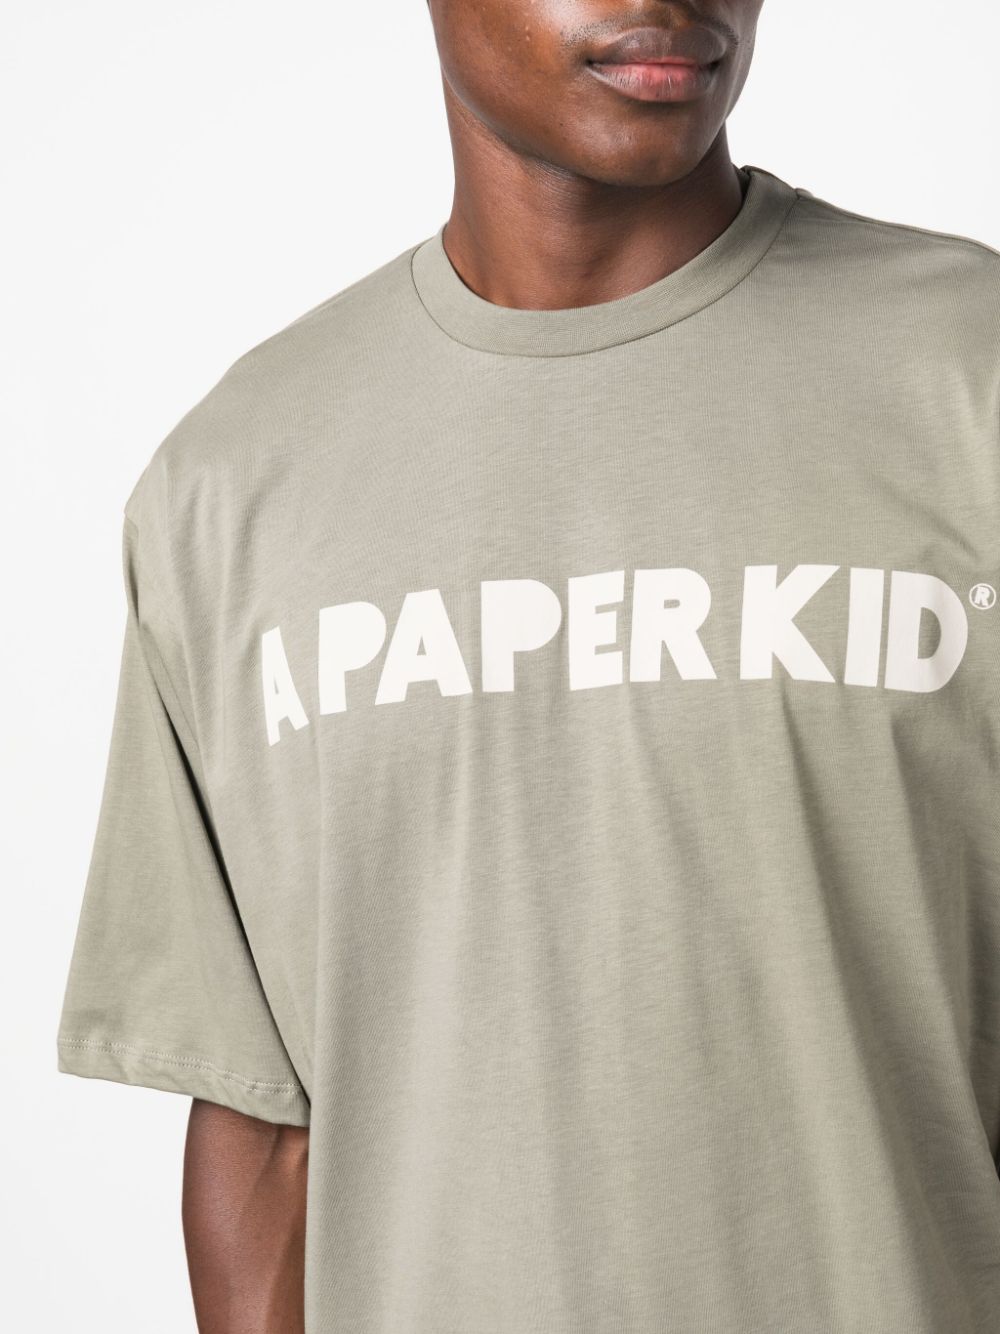 A Paper Kid A PAPER KID- Logo Cotton T-shirt